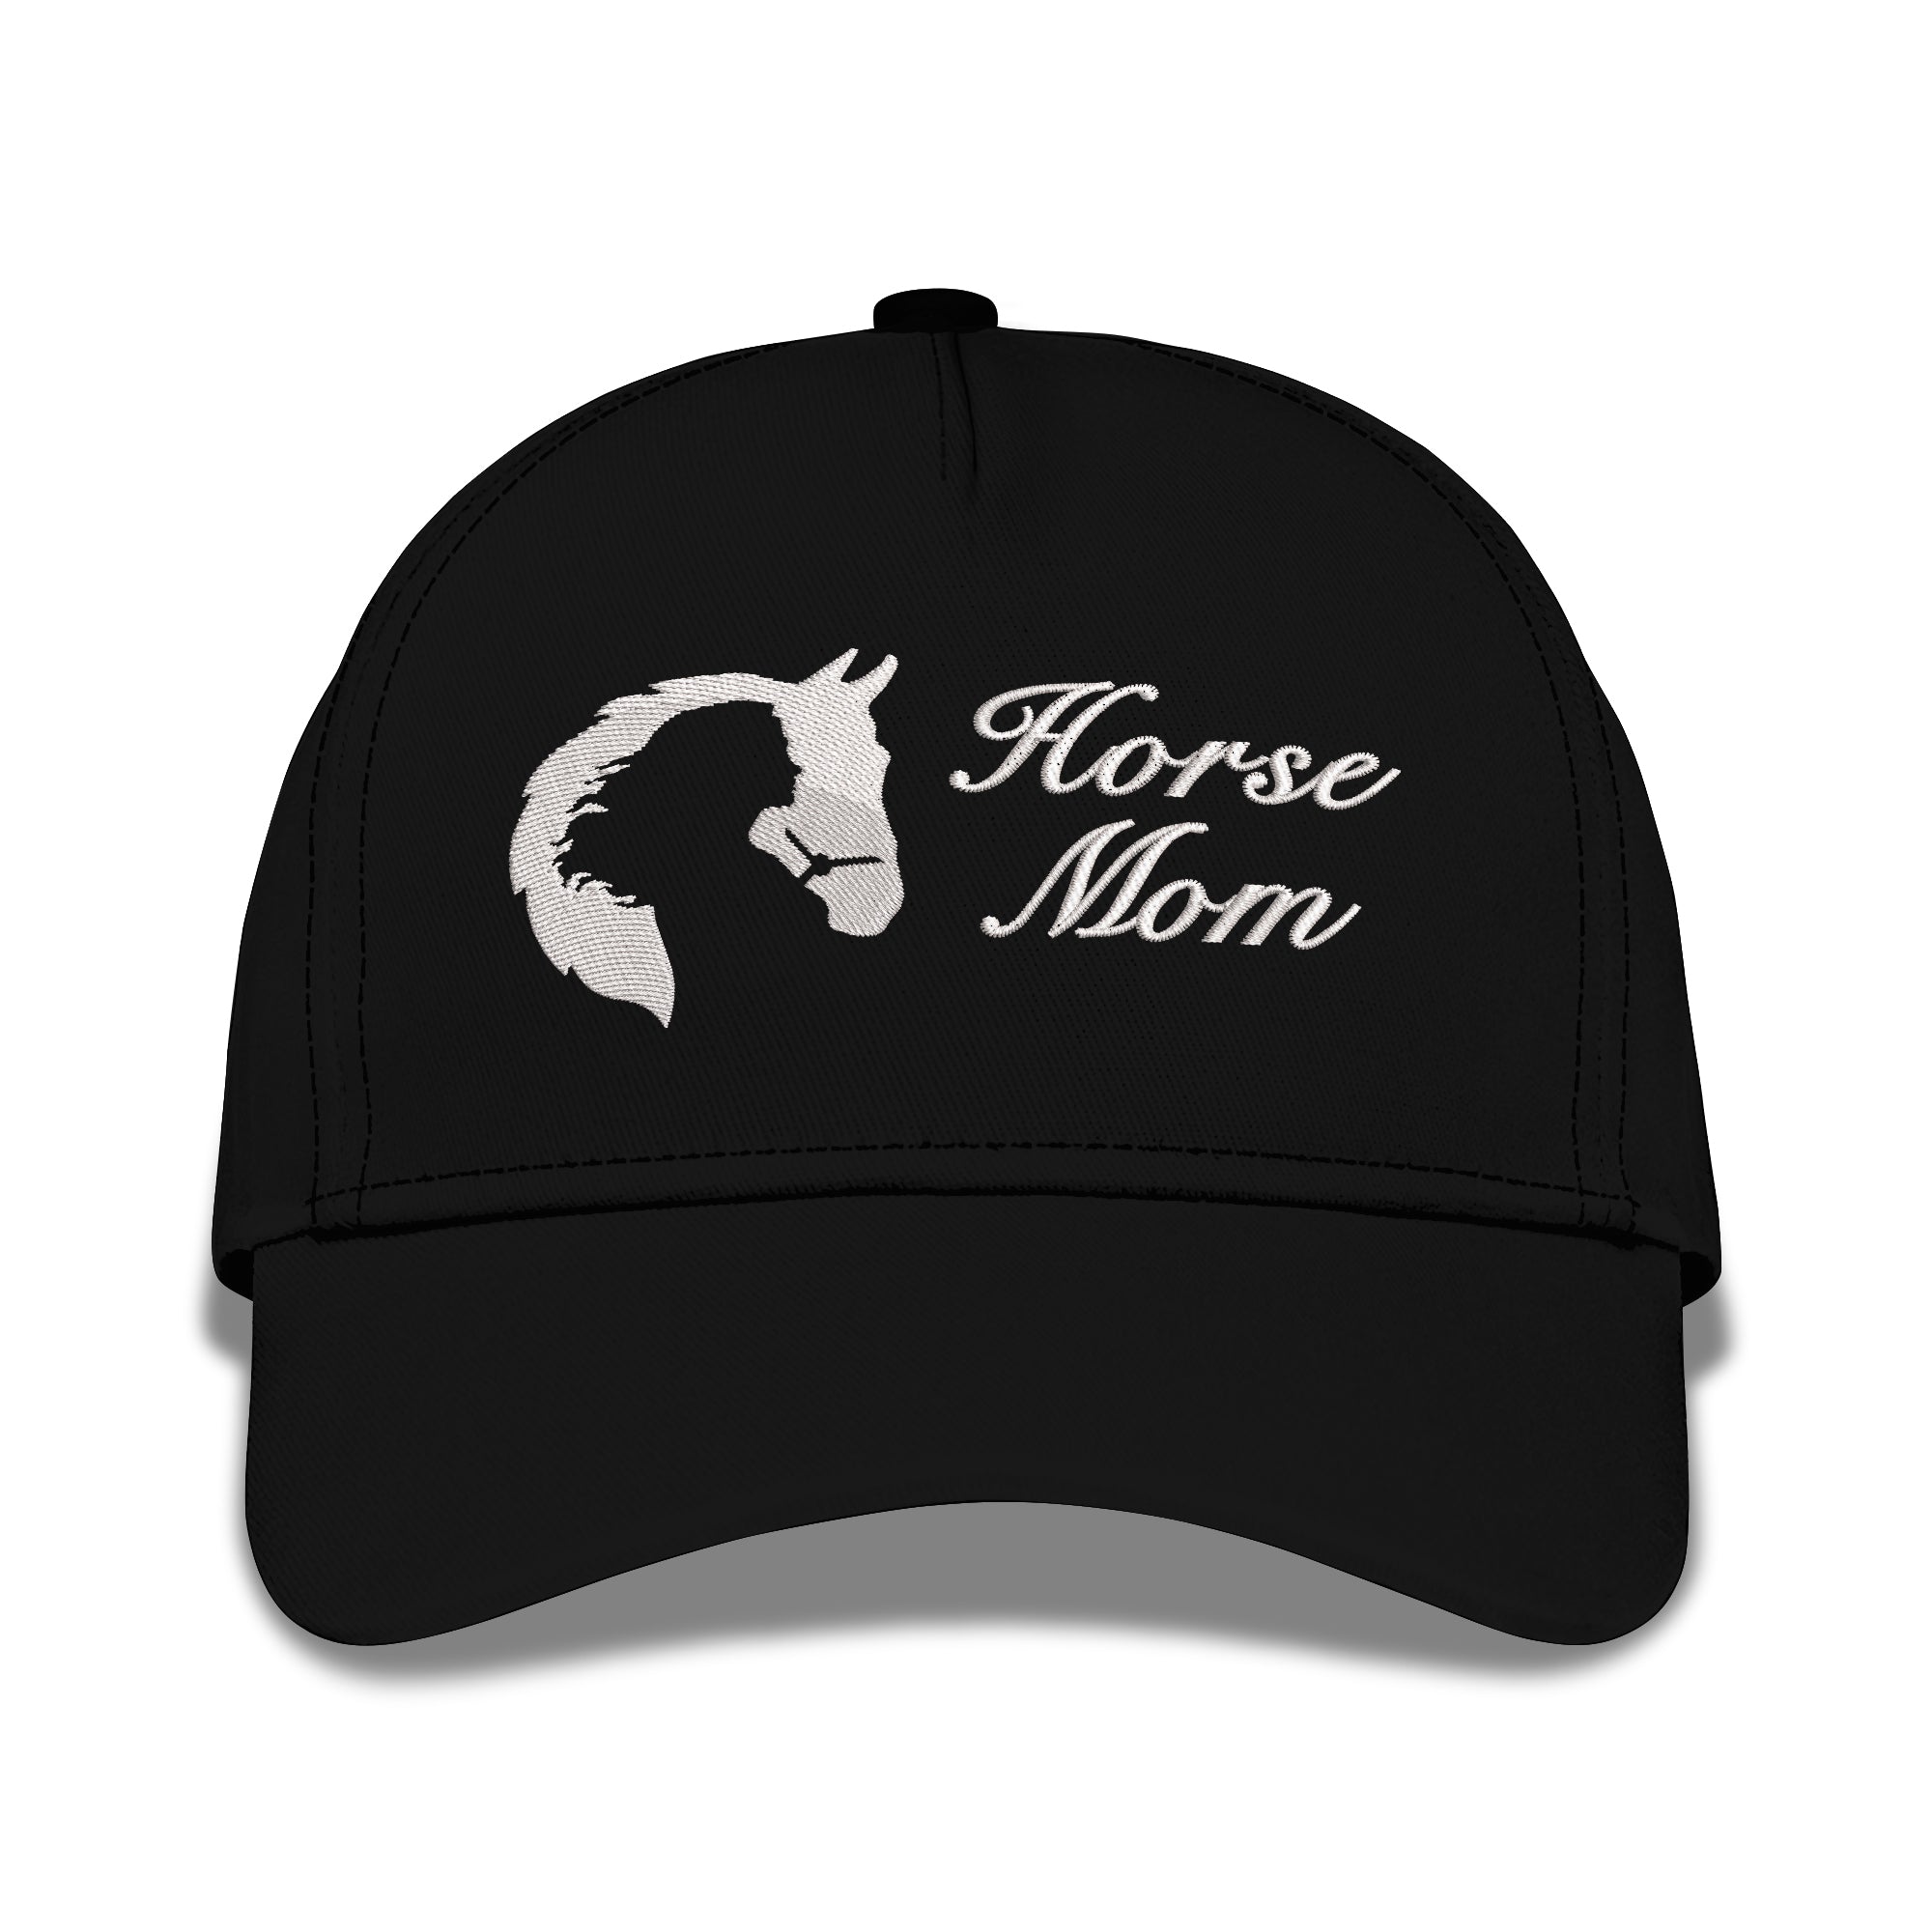 Horse Mom Embroidered Baseball Caps